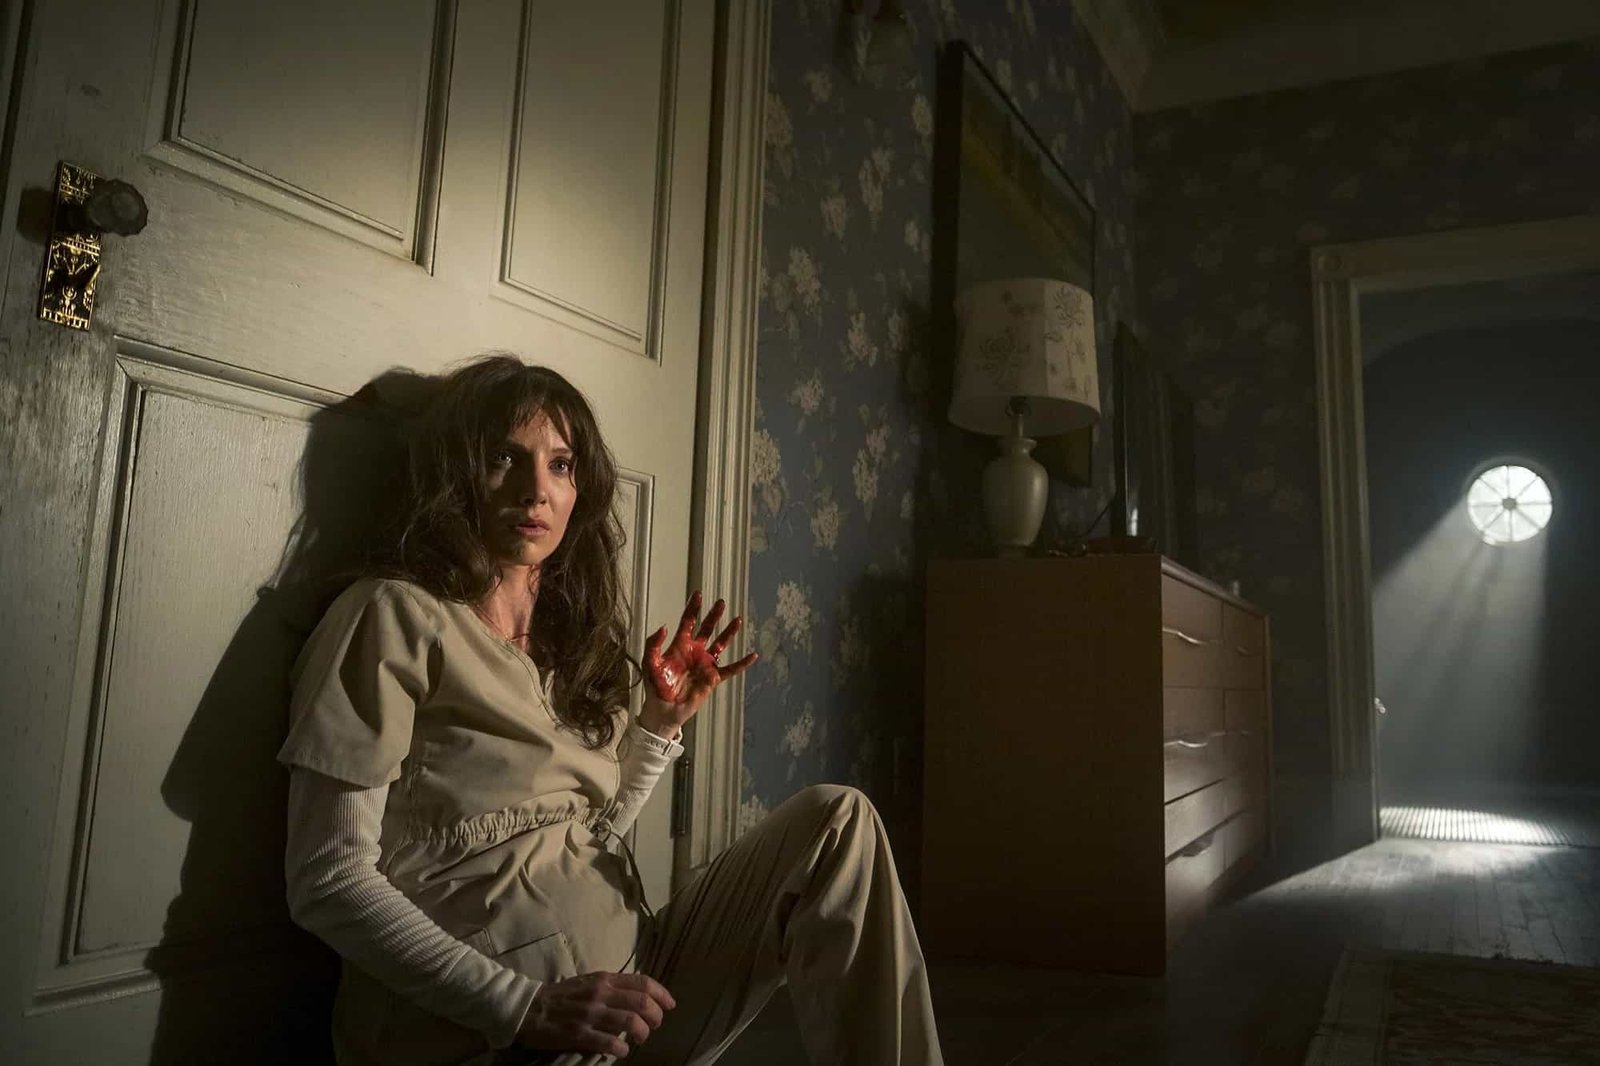 Horror Film 'Malignant' Gets Blu-Ray Release